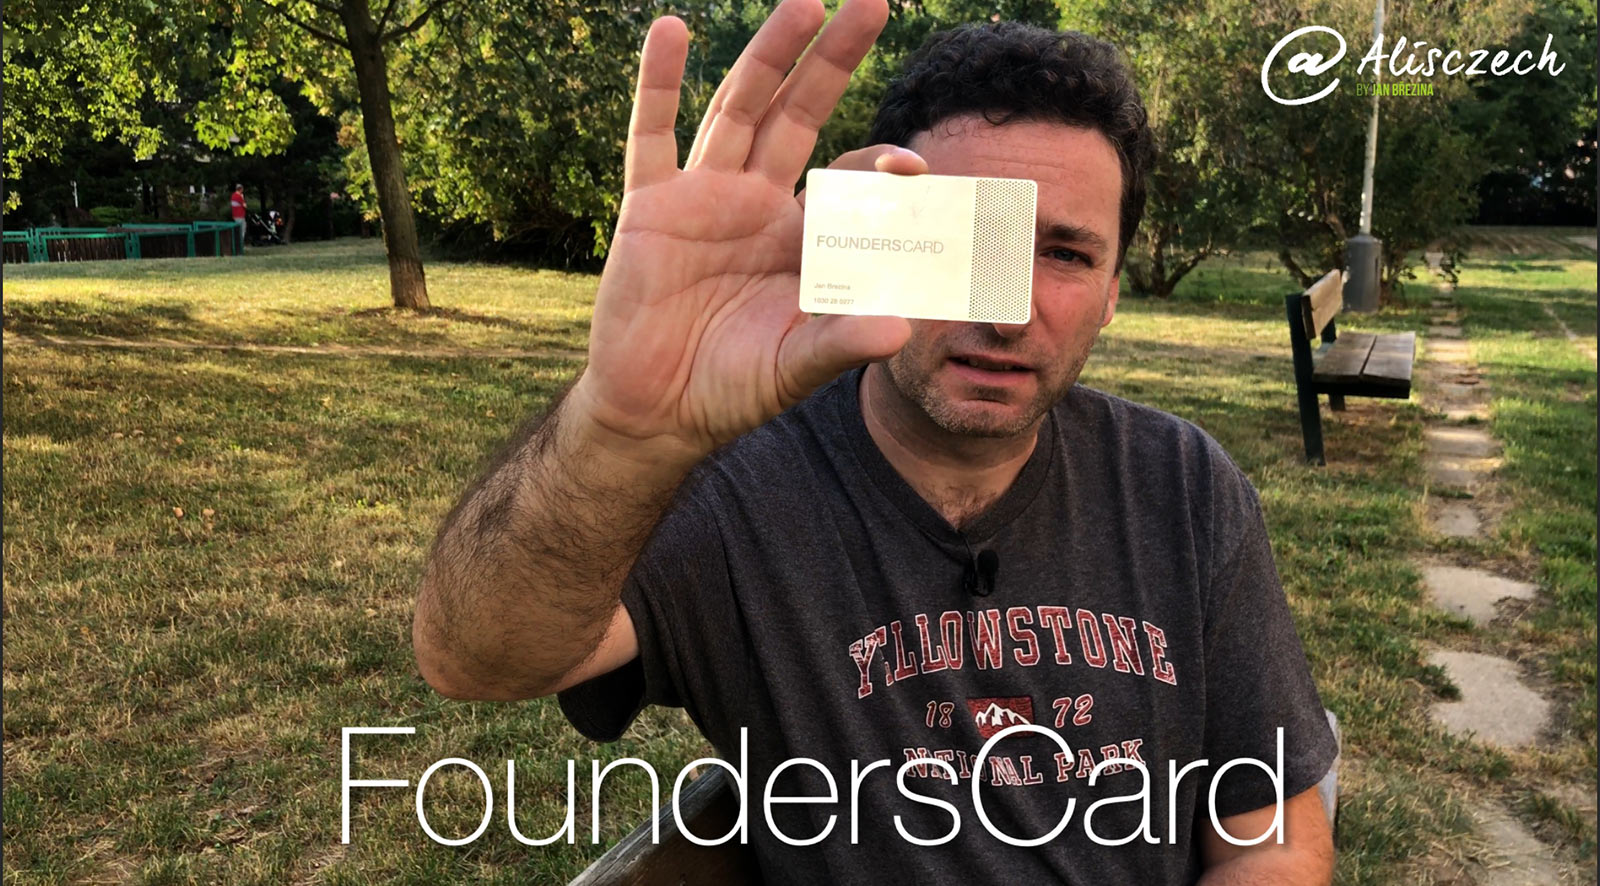 FoundersCard